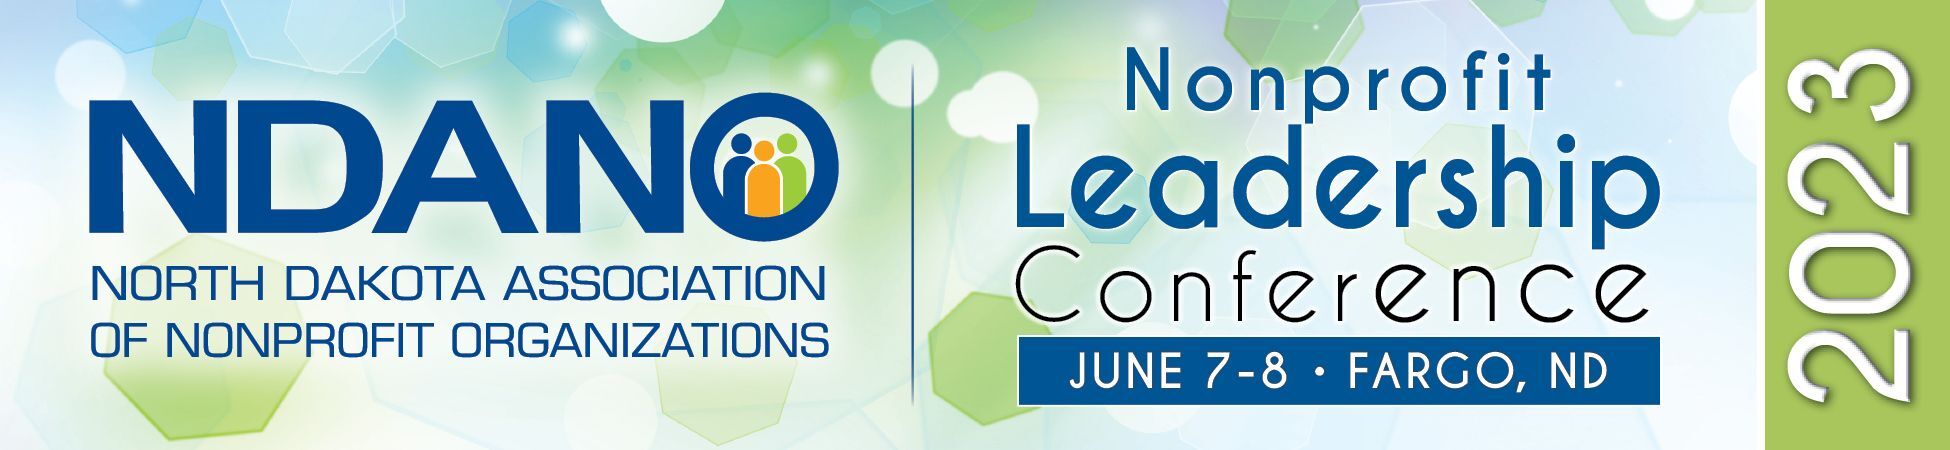 2020 Nonprofit Leadership Conference